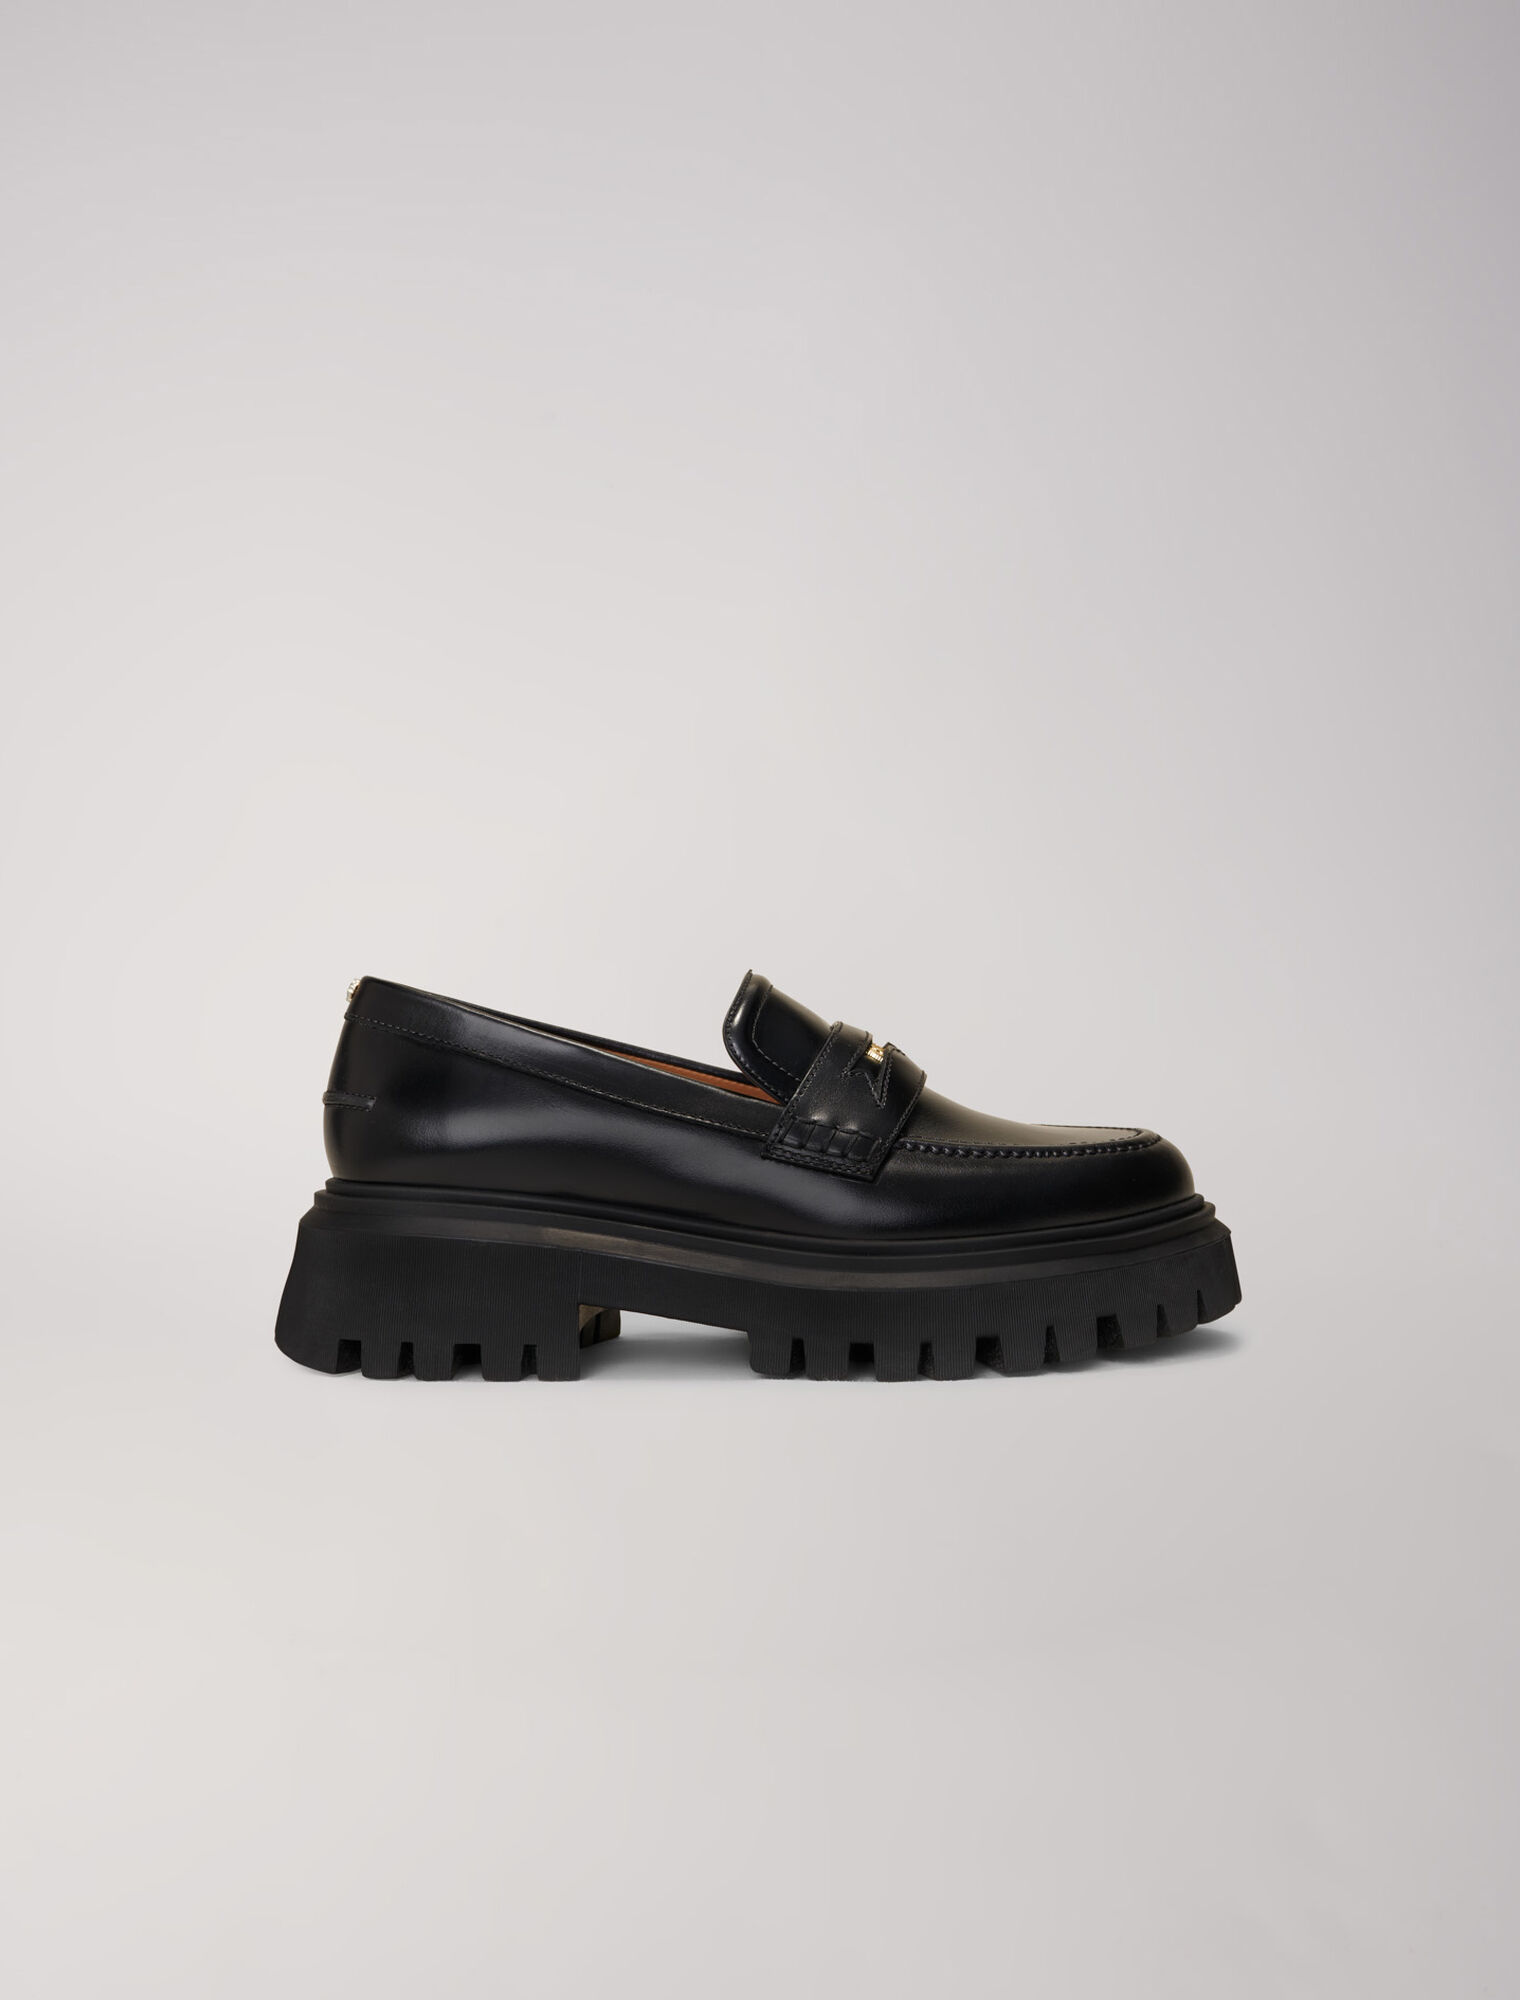 Leather platform loafers